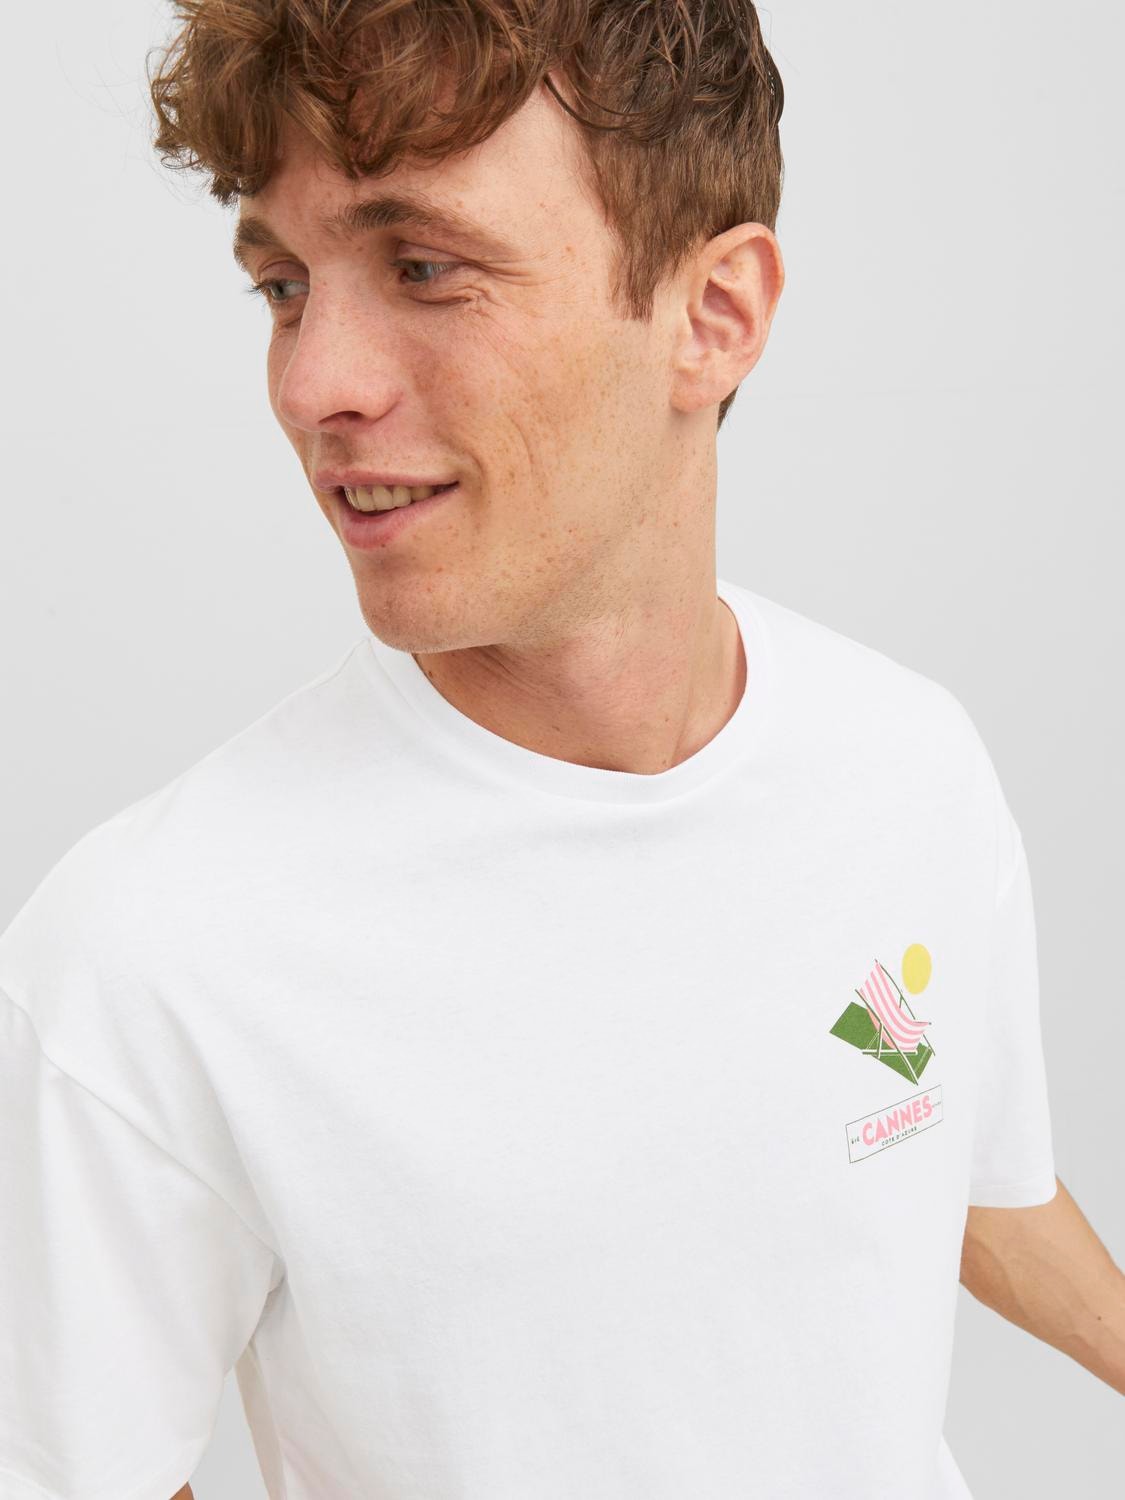 Jack & Jones Printed Crew neck T-shirt -White - 12245471